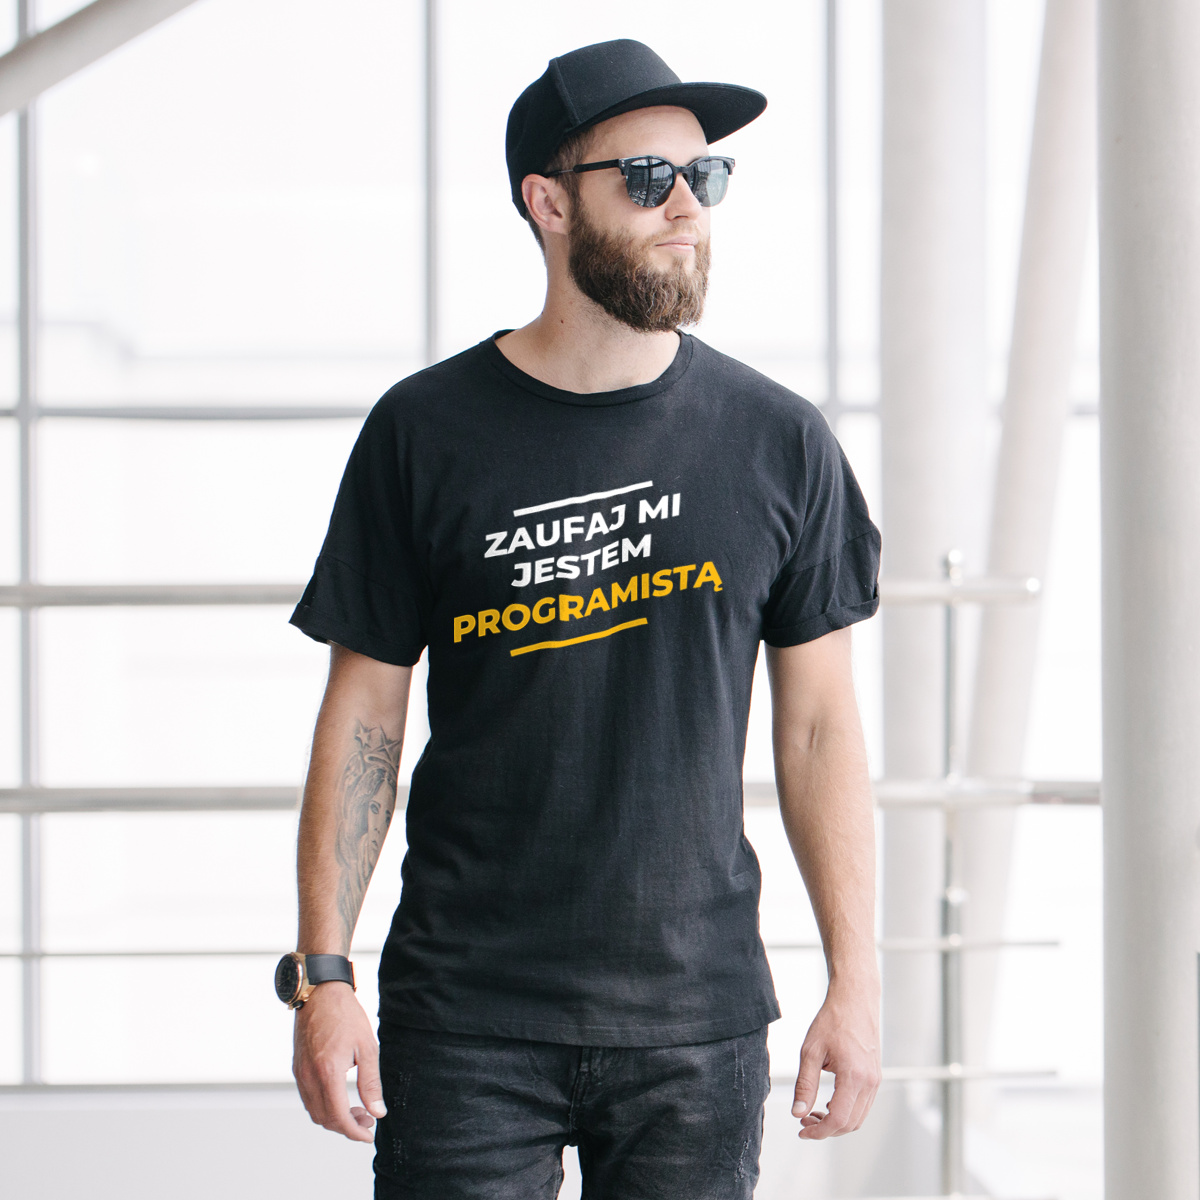 Zaufaj Mi Jestem Programistą - Męska Koszulka Czarna